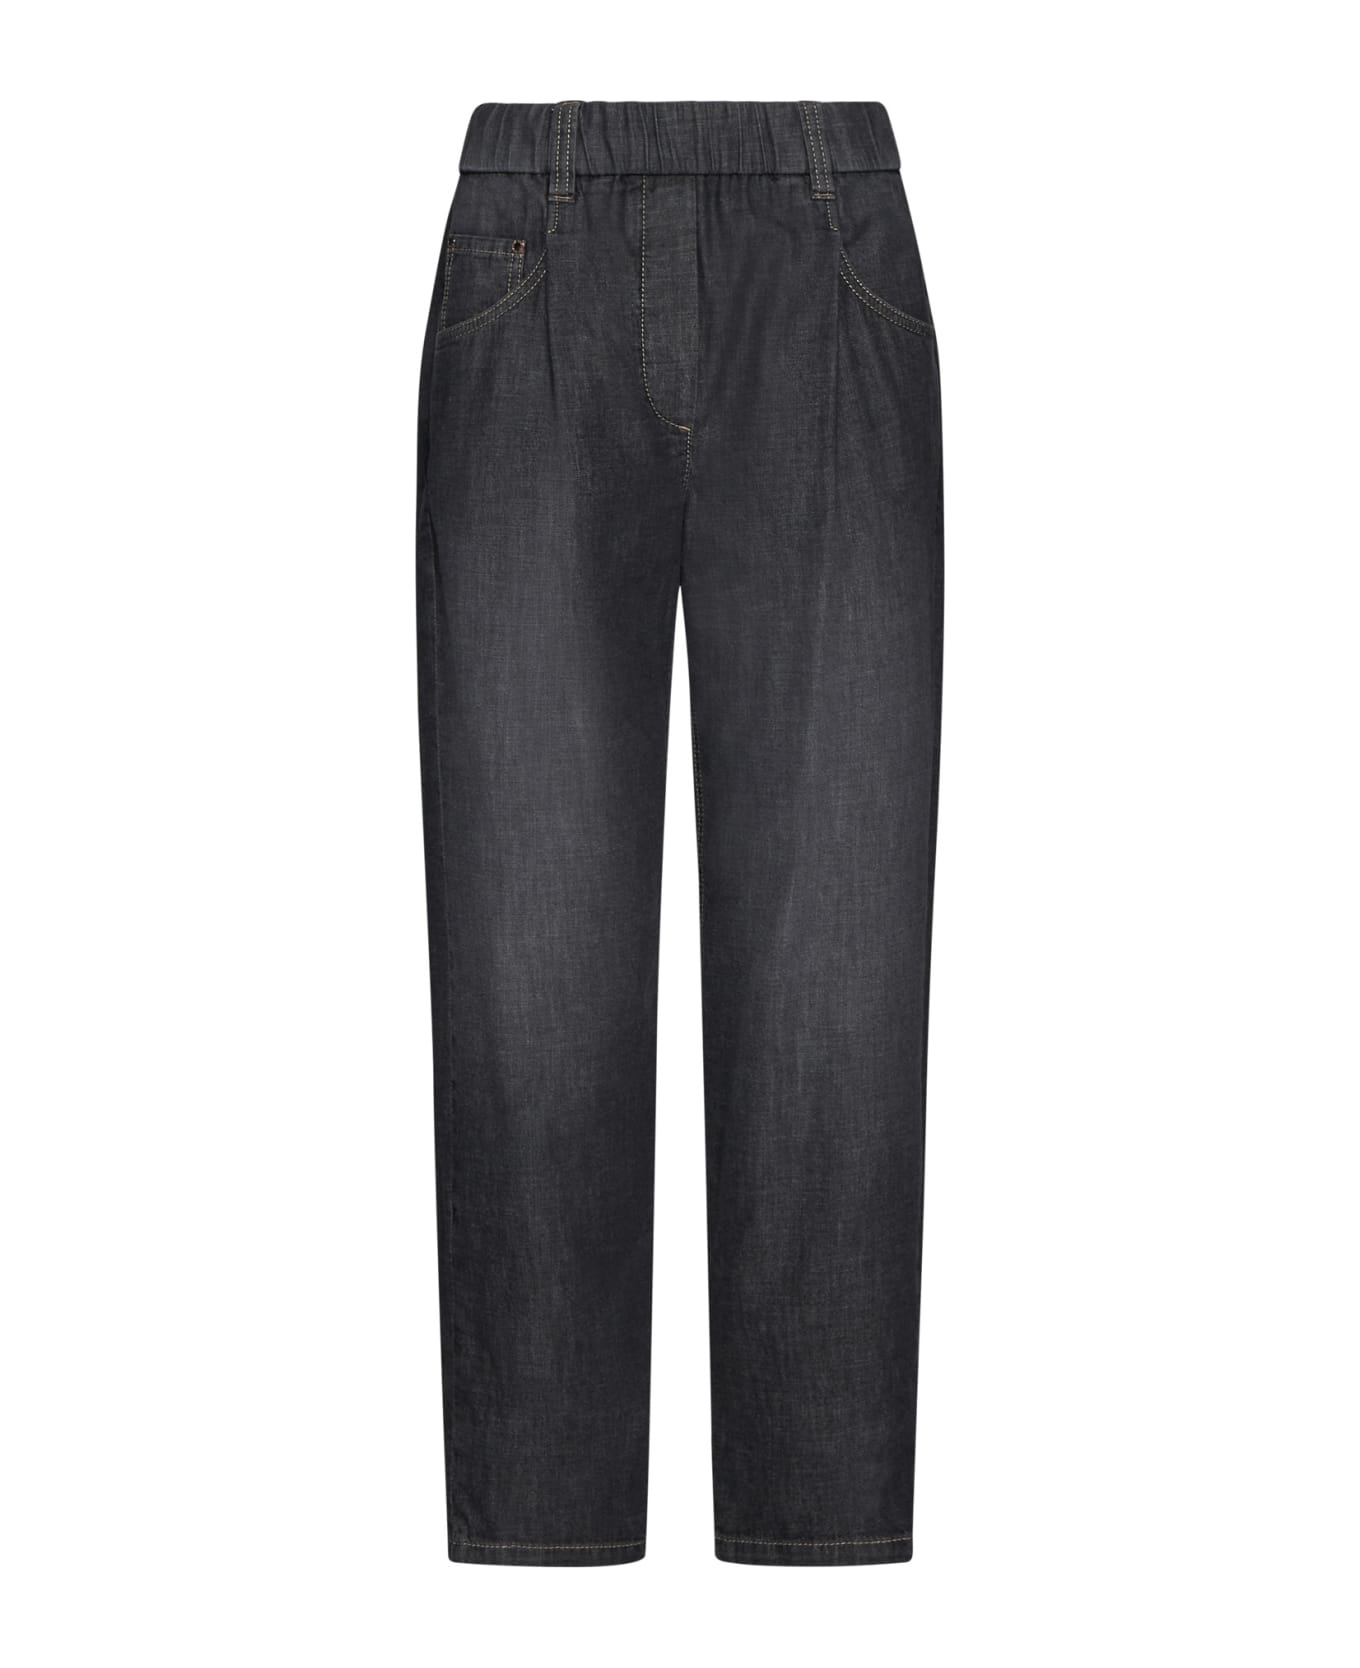 Brunello Cucinelli Elasticated Waistband Cropped Jeans - Black vintage denim senza baff ボトムス